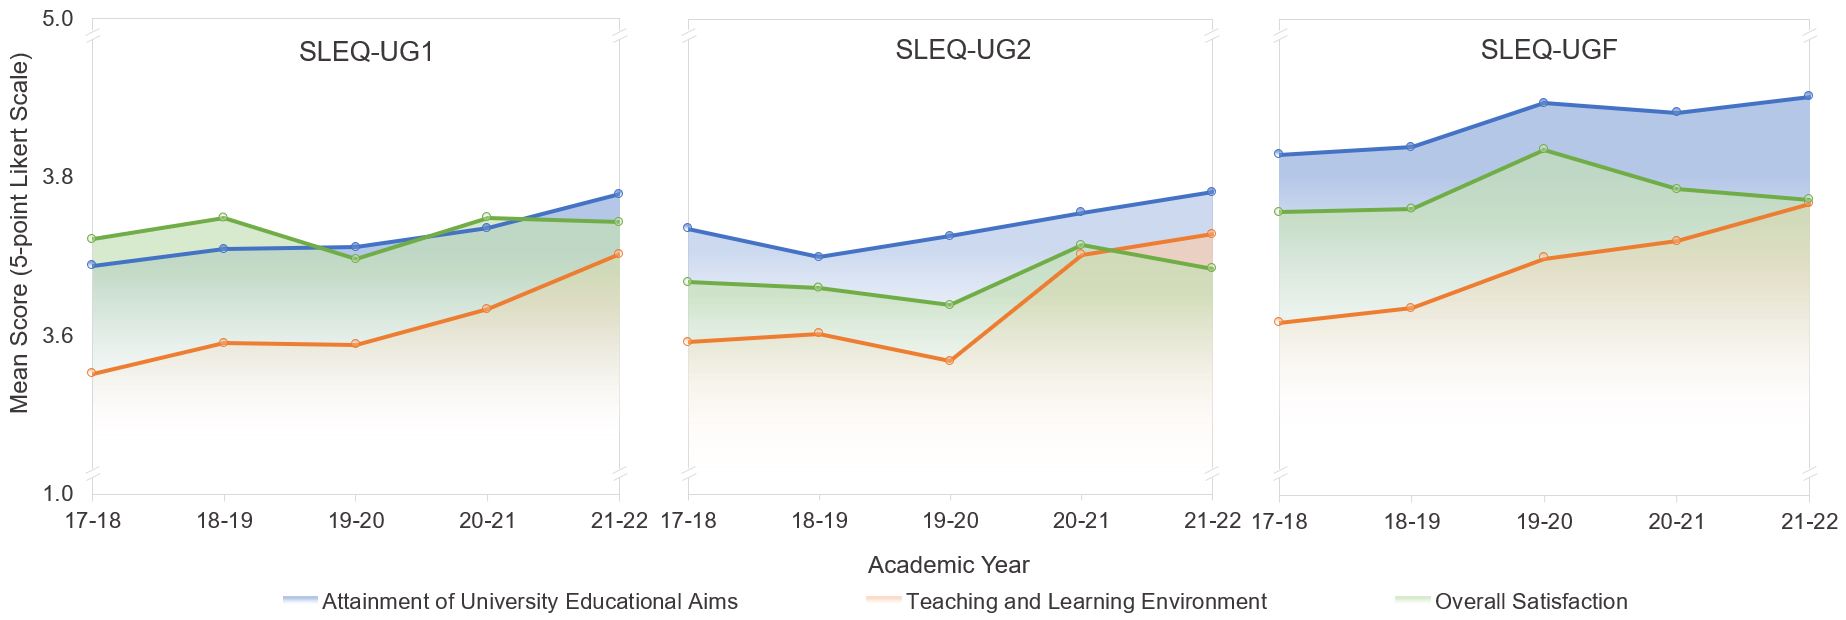 SLEQ-UG Key Performance Indicators (KPIs) from 2017-18 to 2021-22